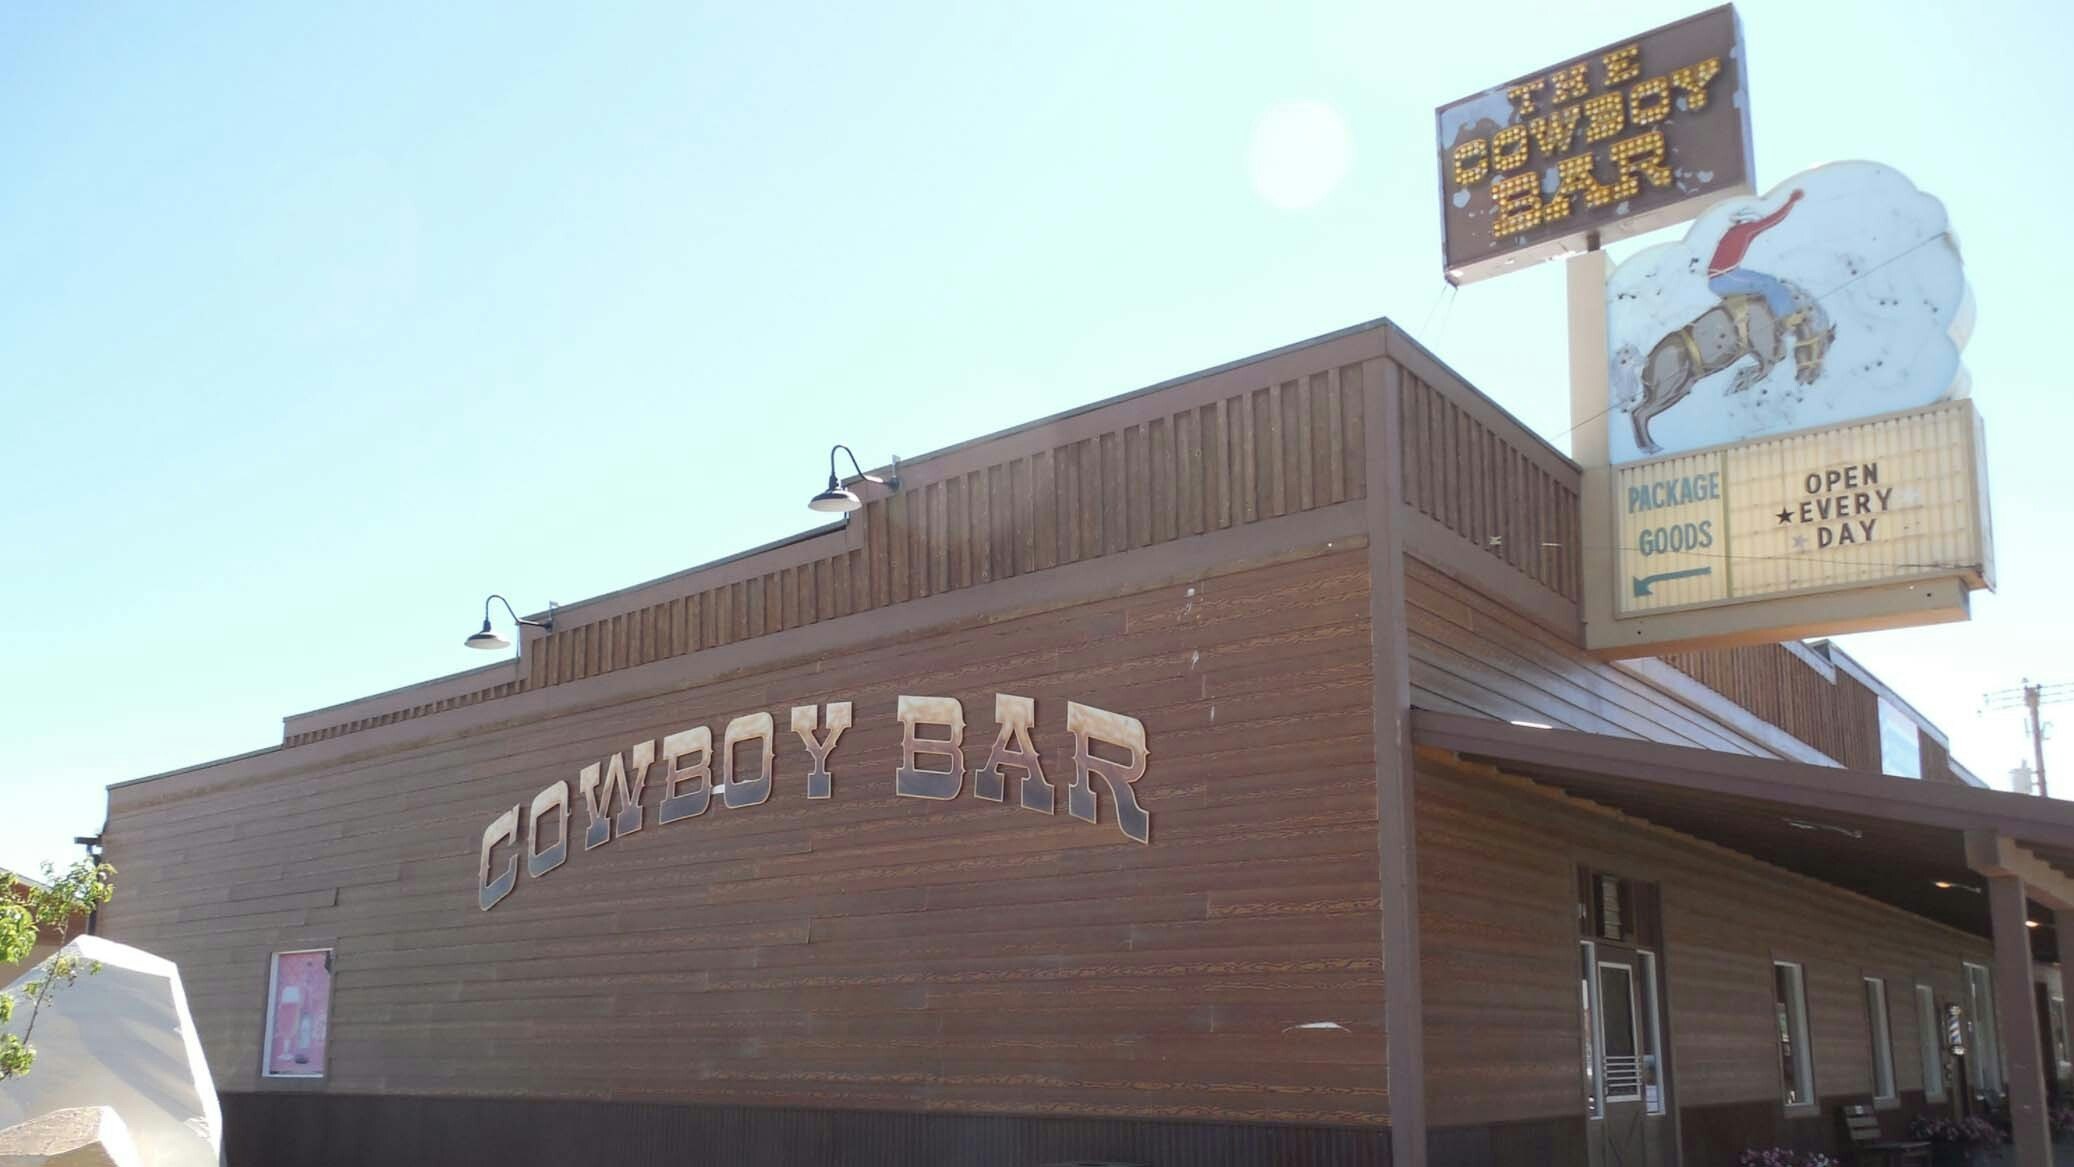 Cowboy bar pinedale